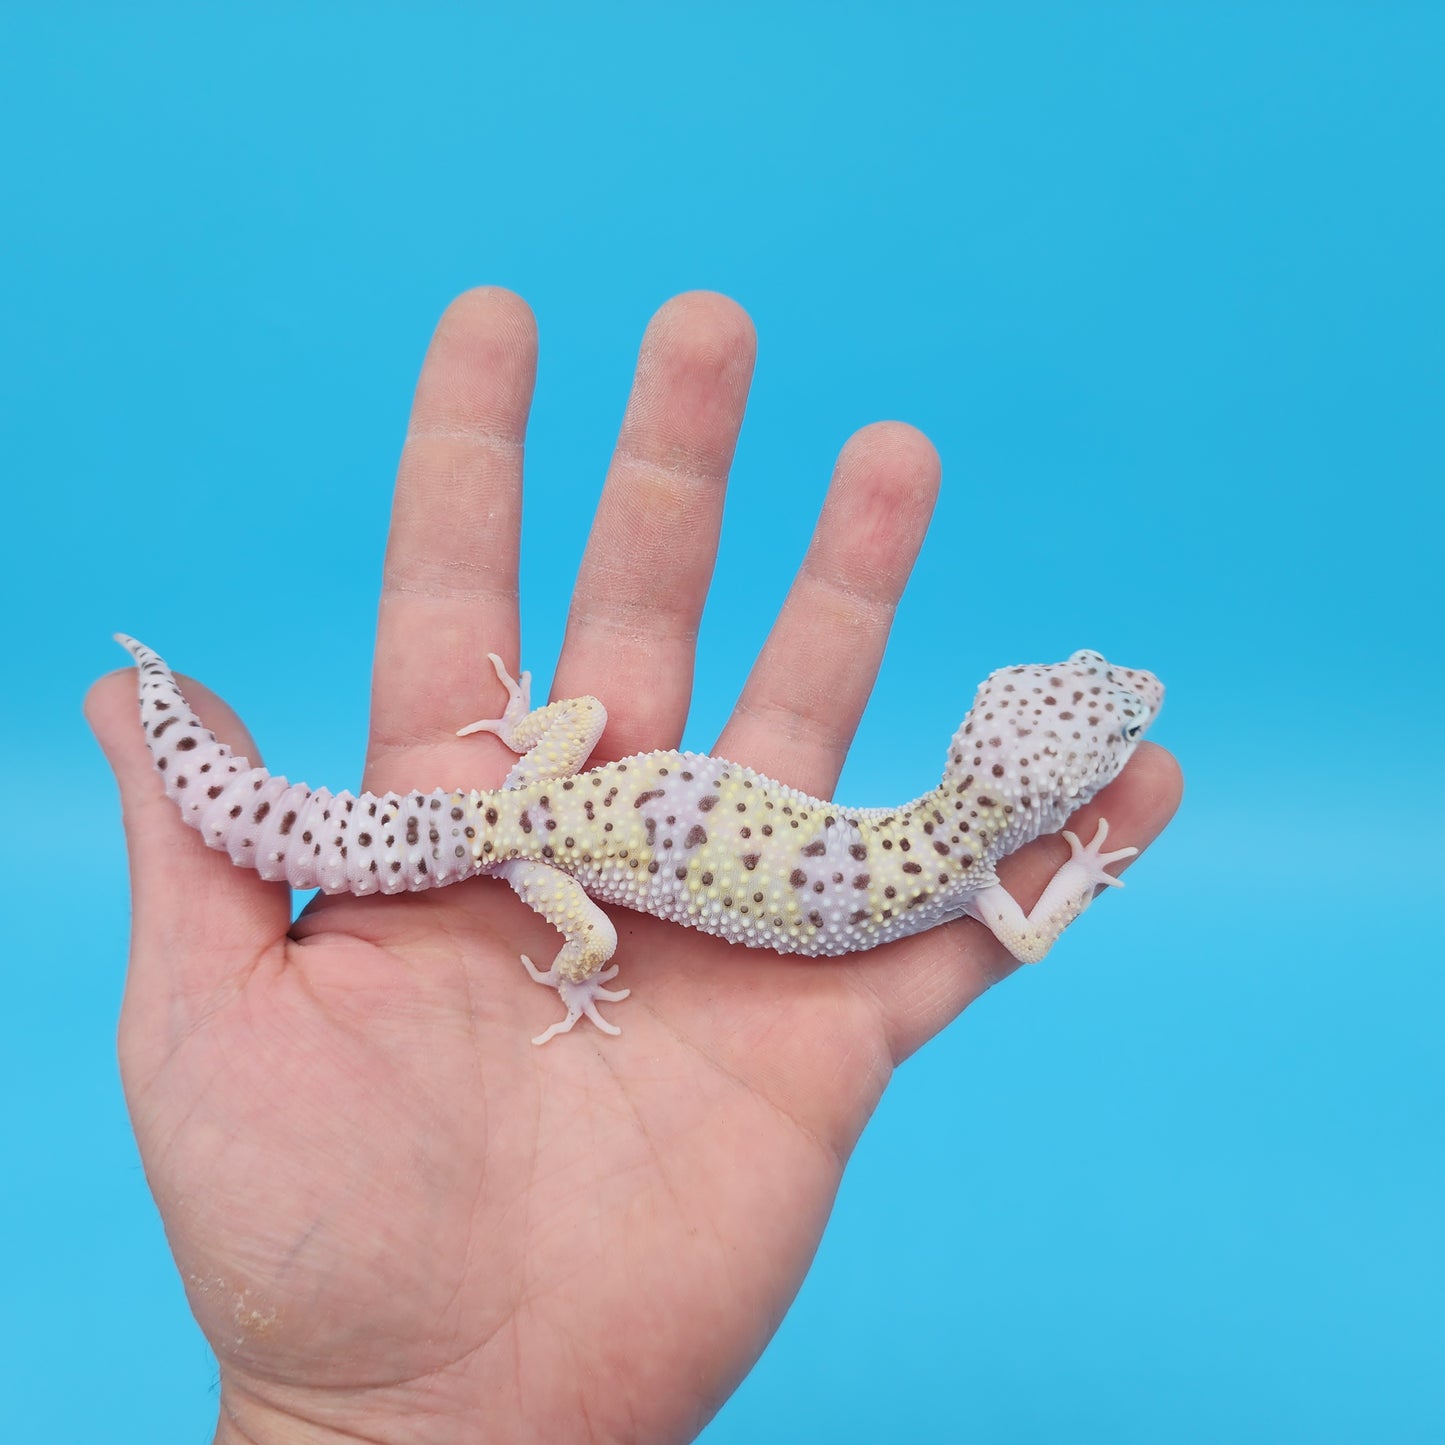 Male Pure Fasciolatus (High Lavender Reduced Pattern Phase) Leopard Gecko